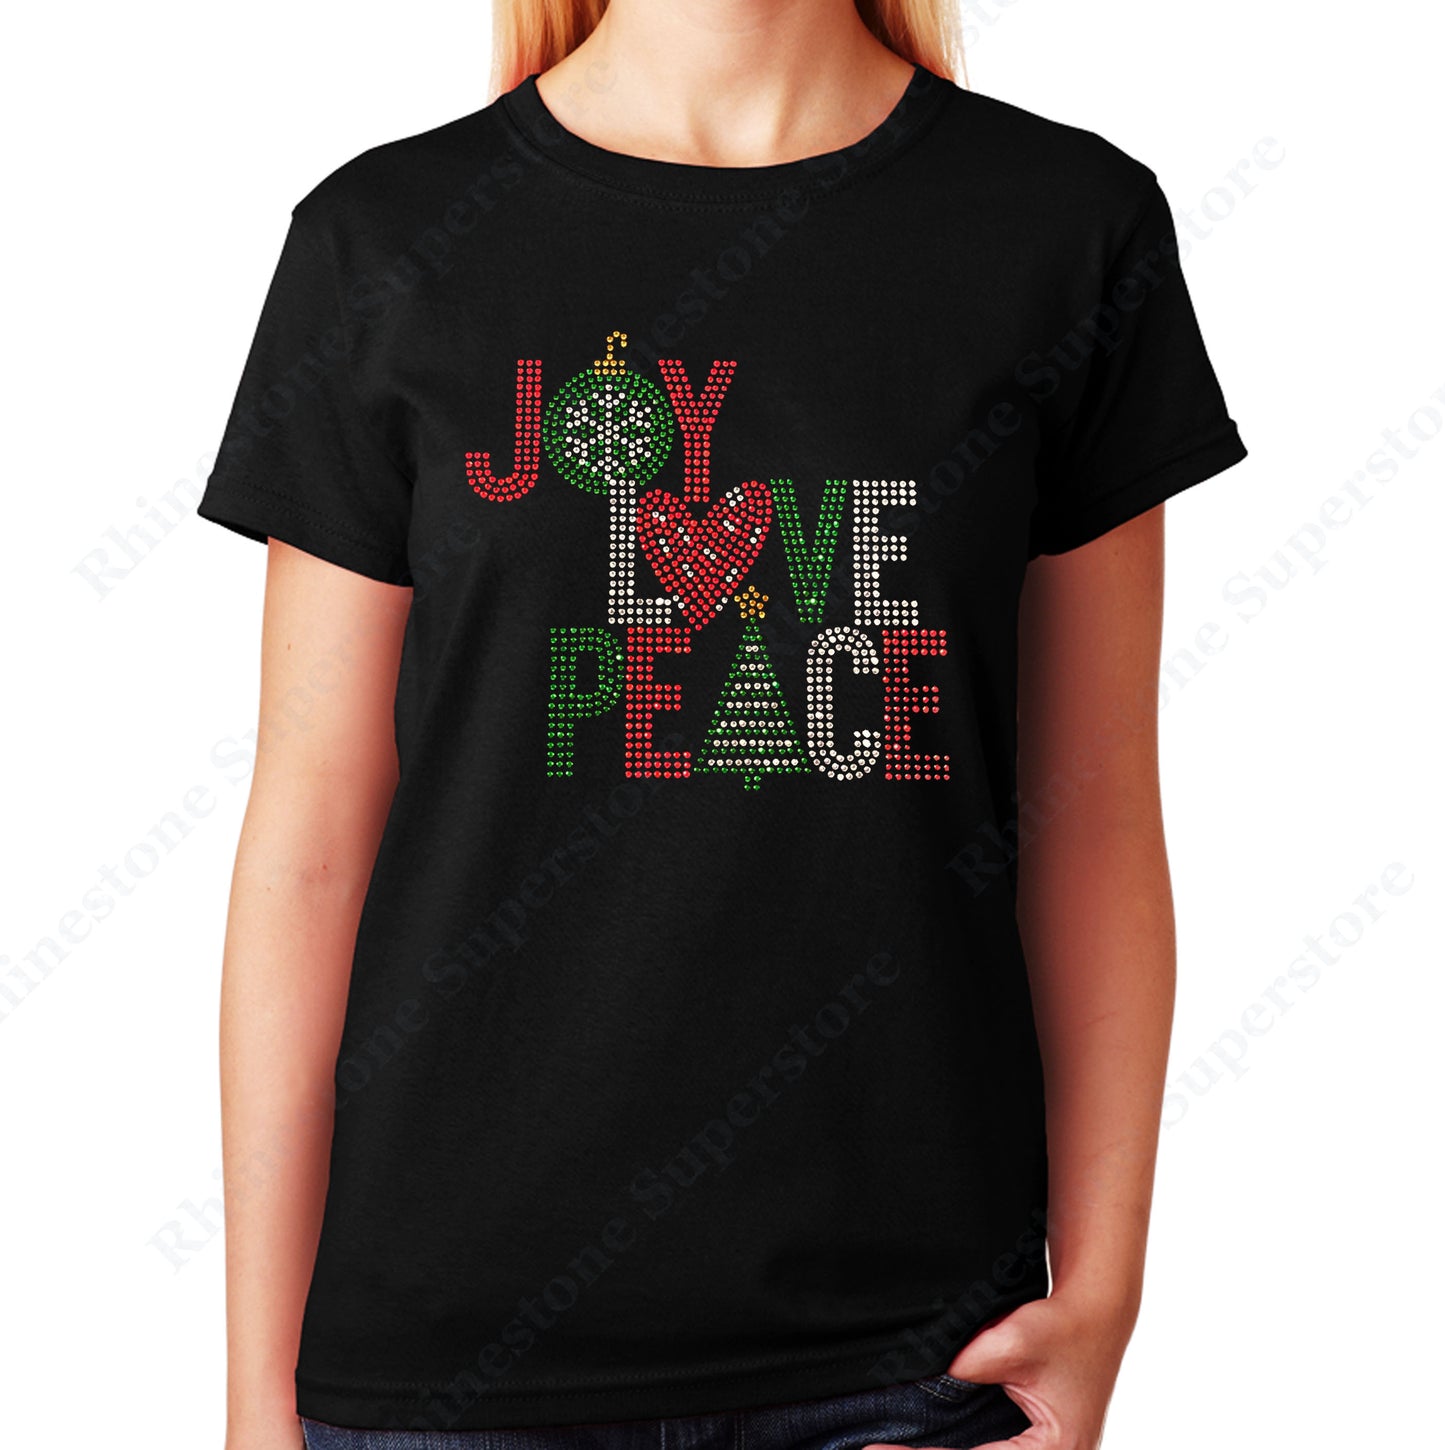 Unisex T-Shirt with Christmas Joy Love Peace in Rhinestones